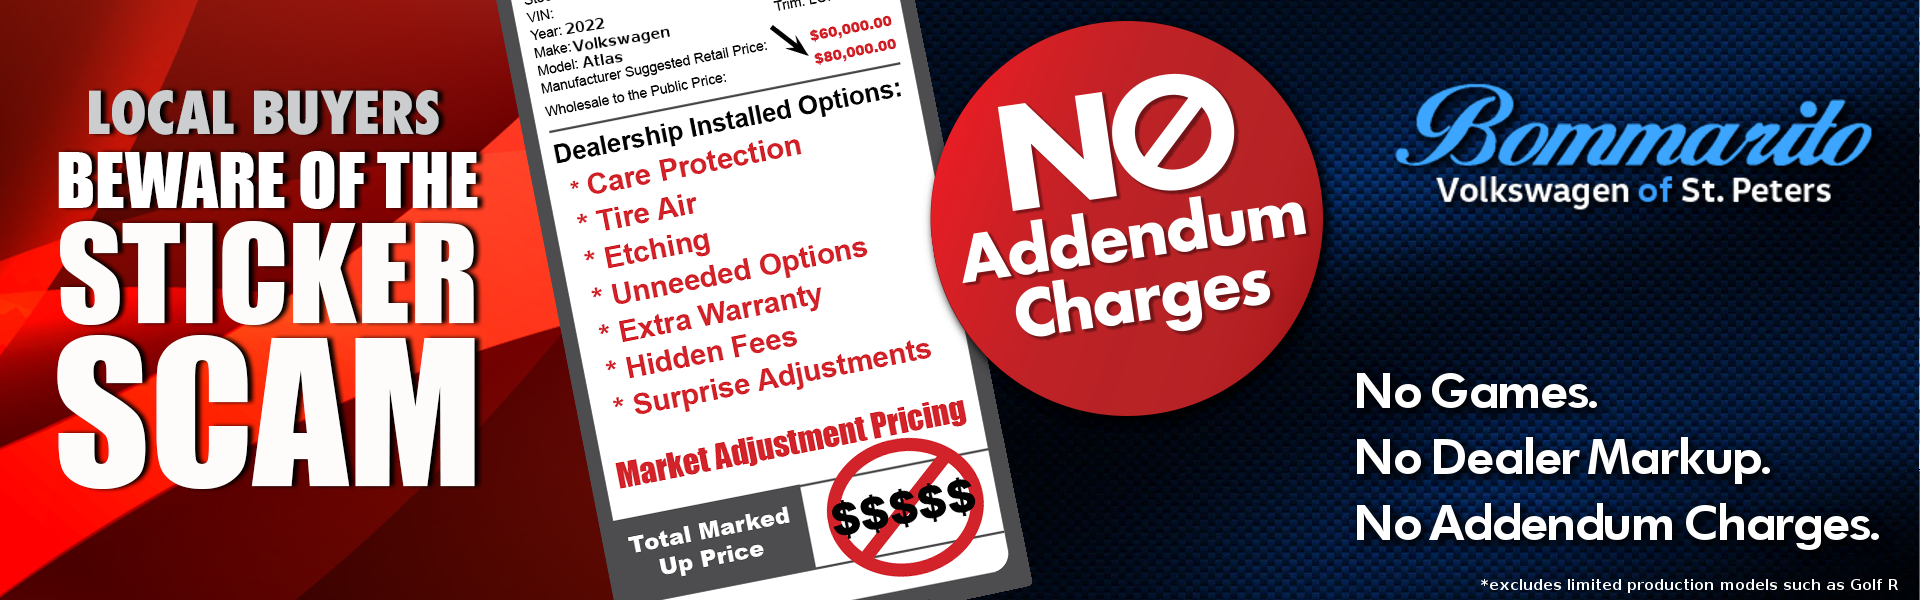 No Addendum Charges